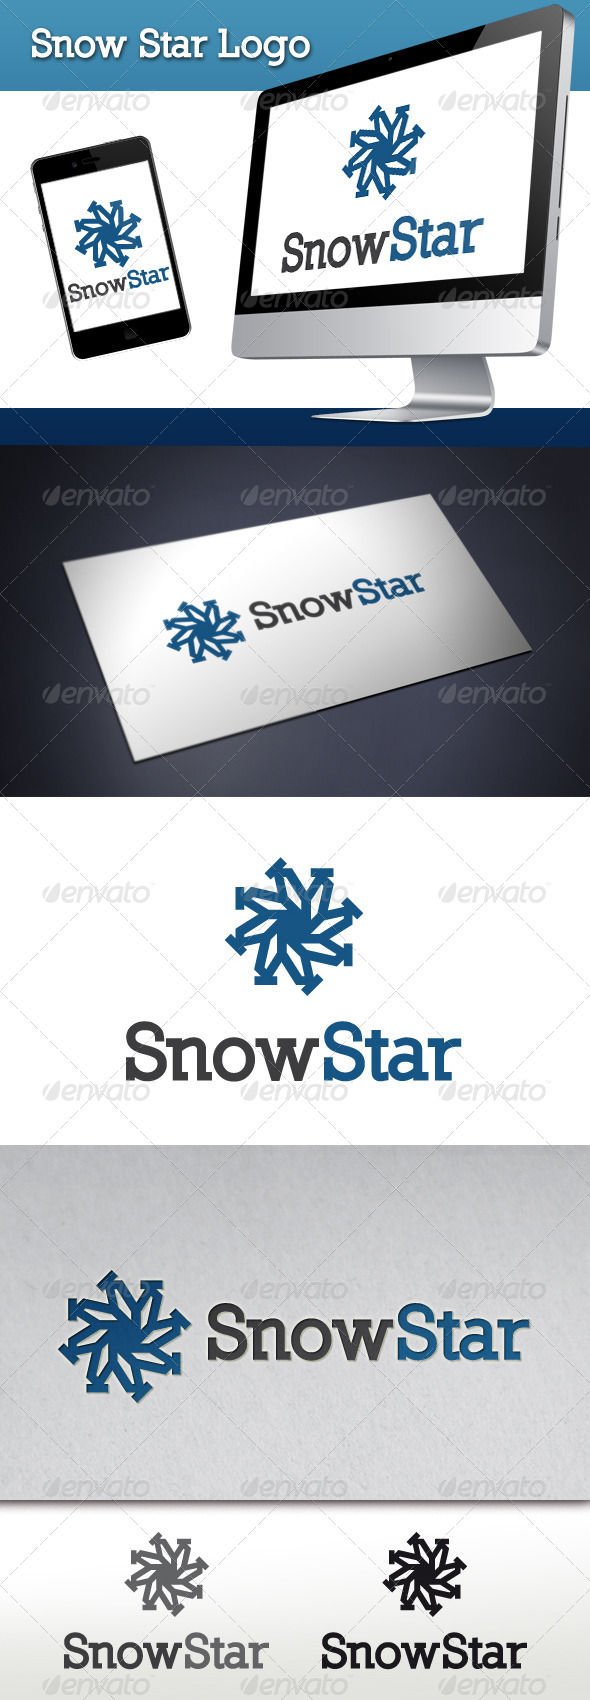 Snow Star Logo Template